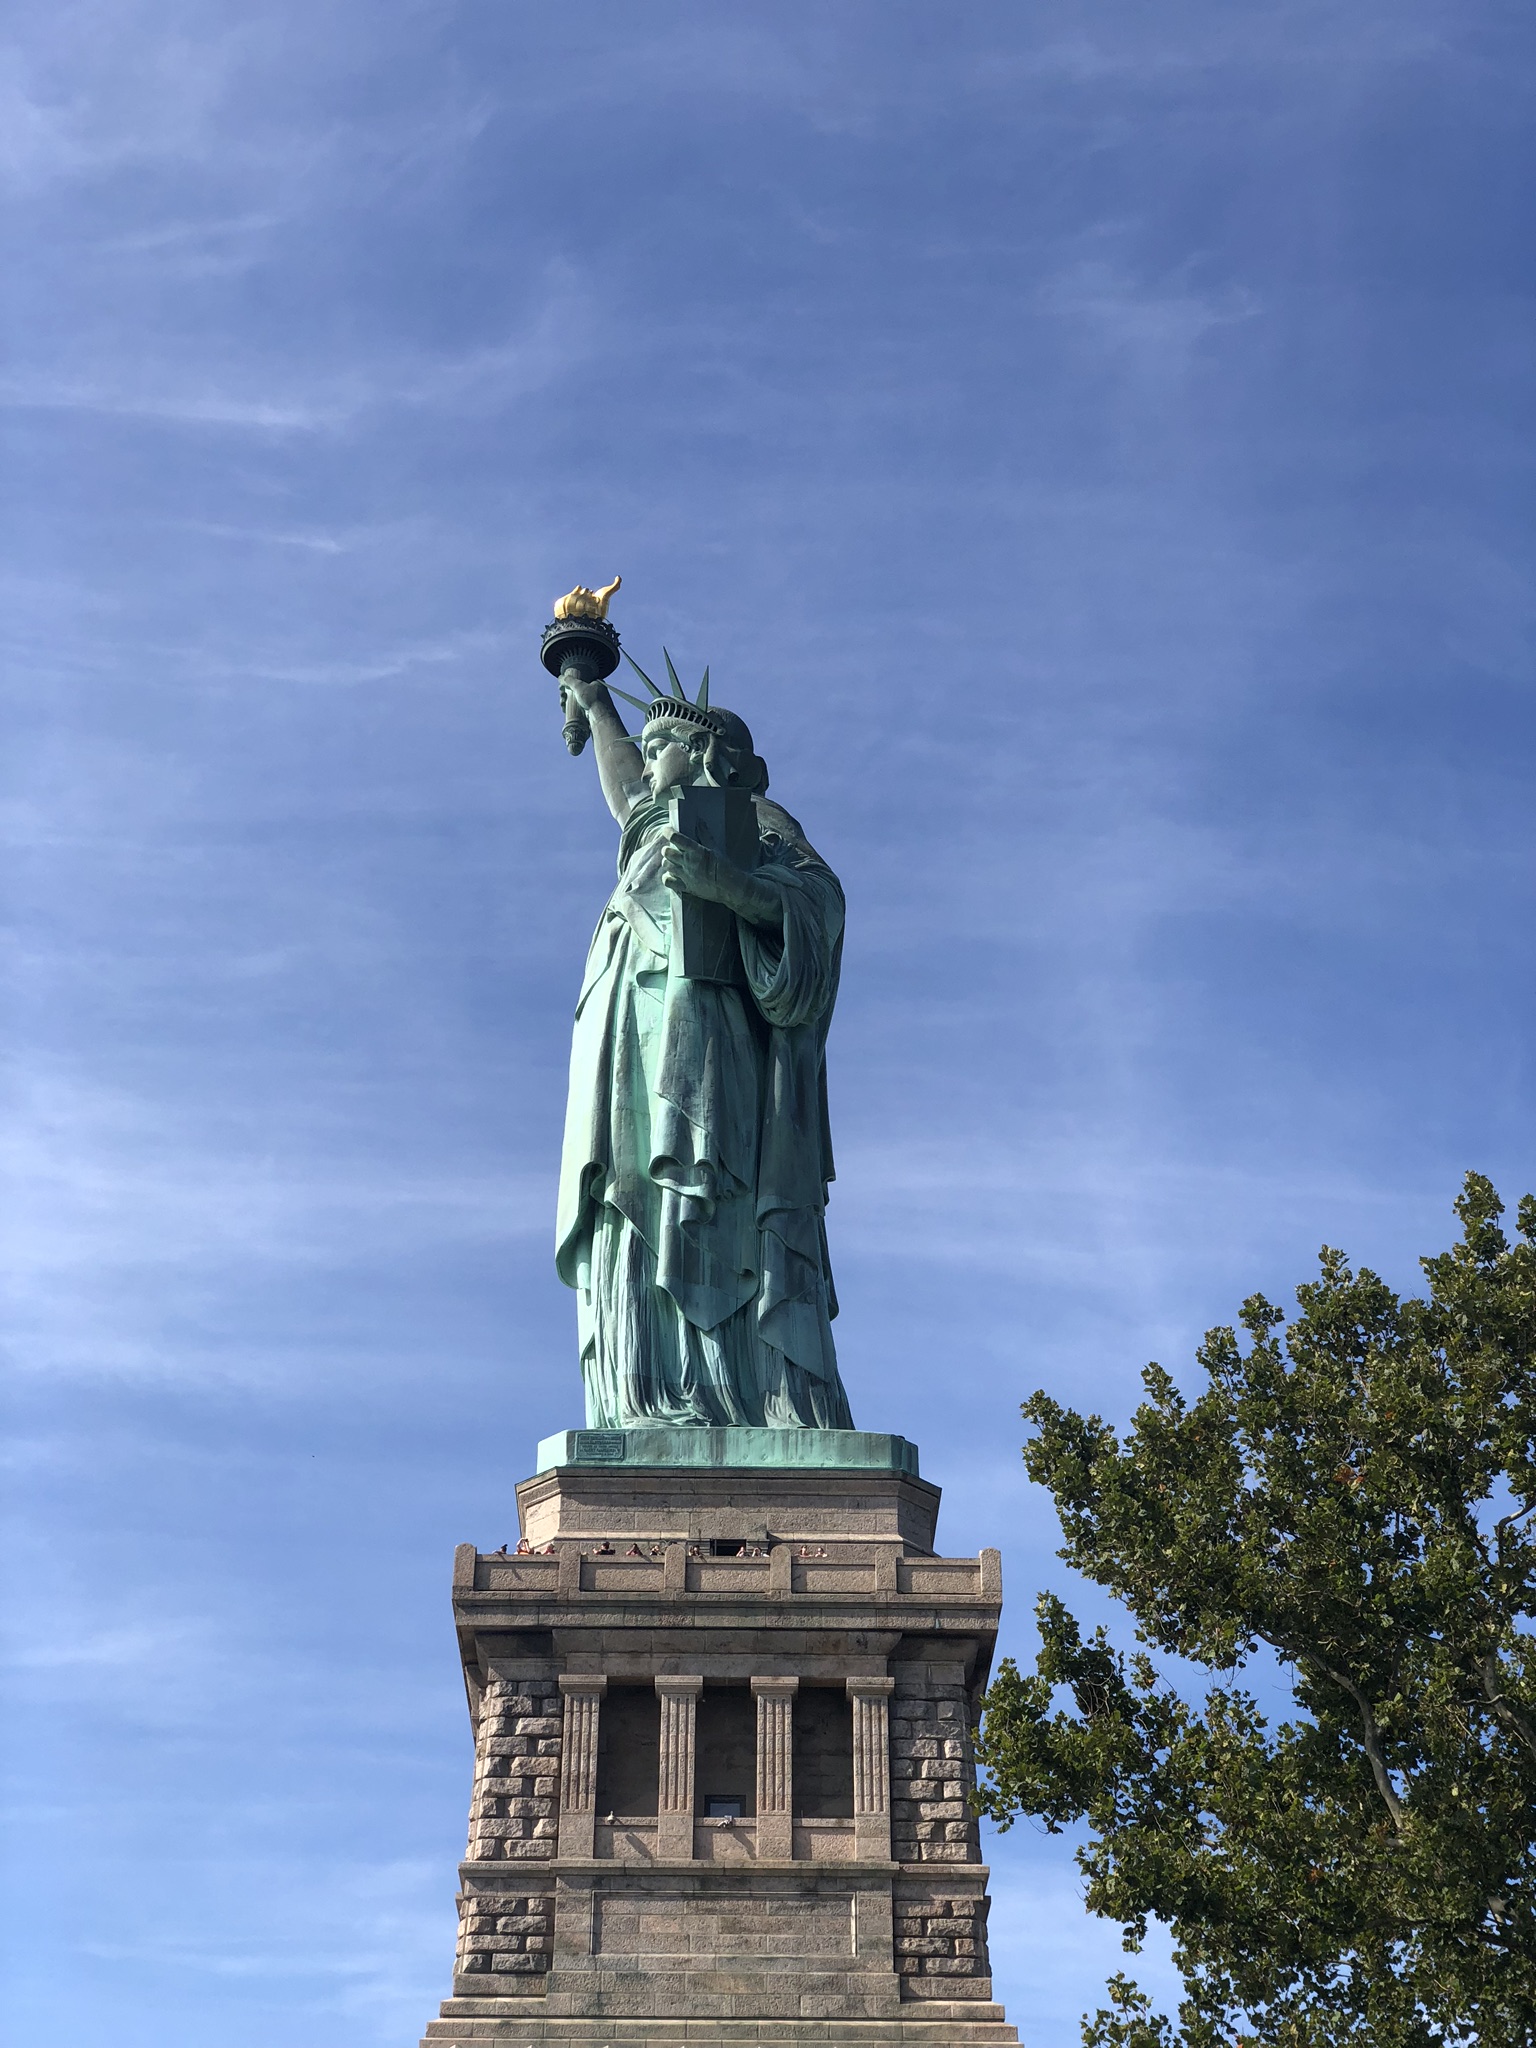 Miss Liberty - son autre profil haha